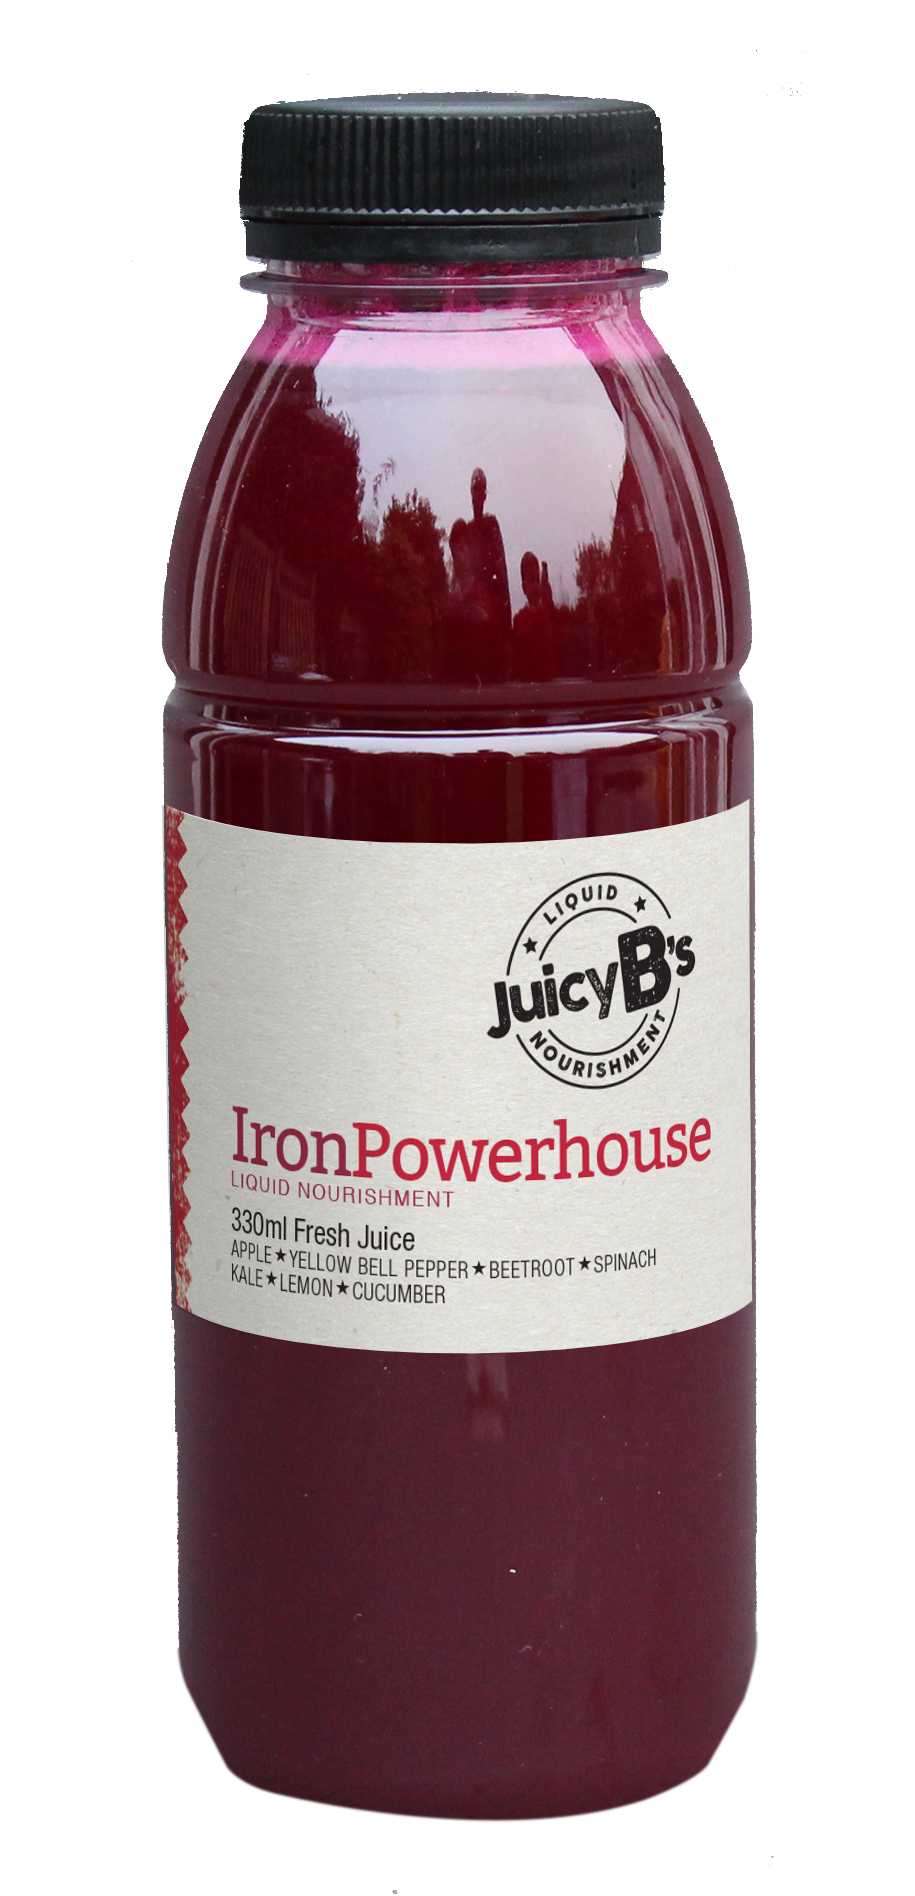 Iron Powerhouse